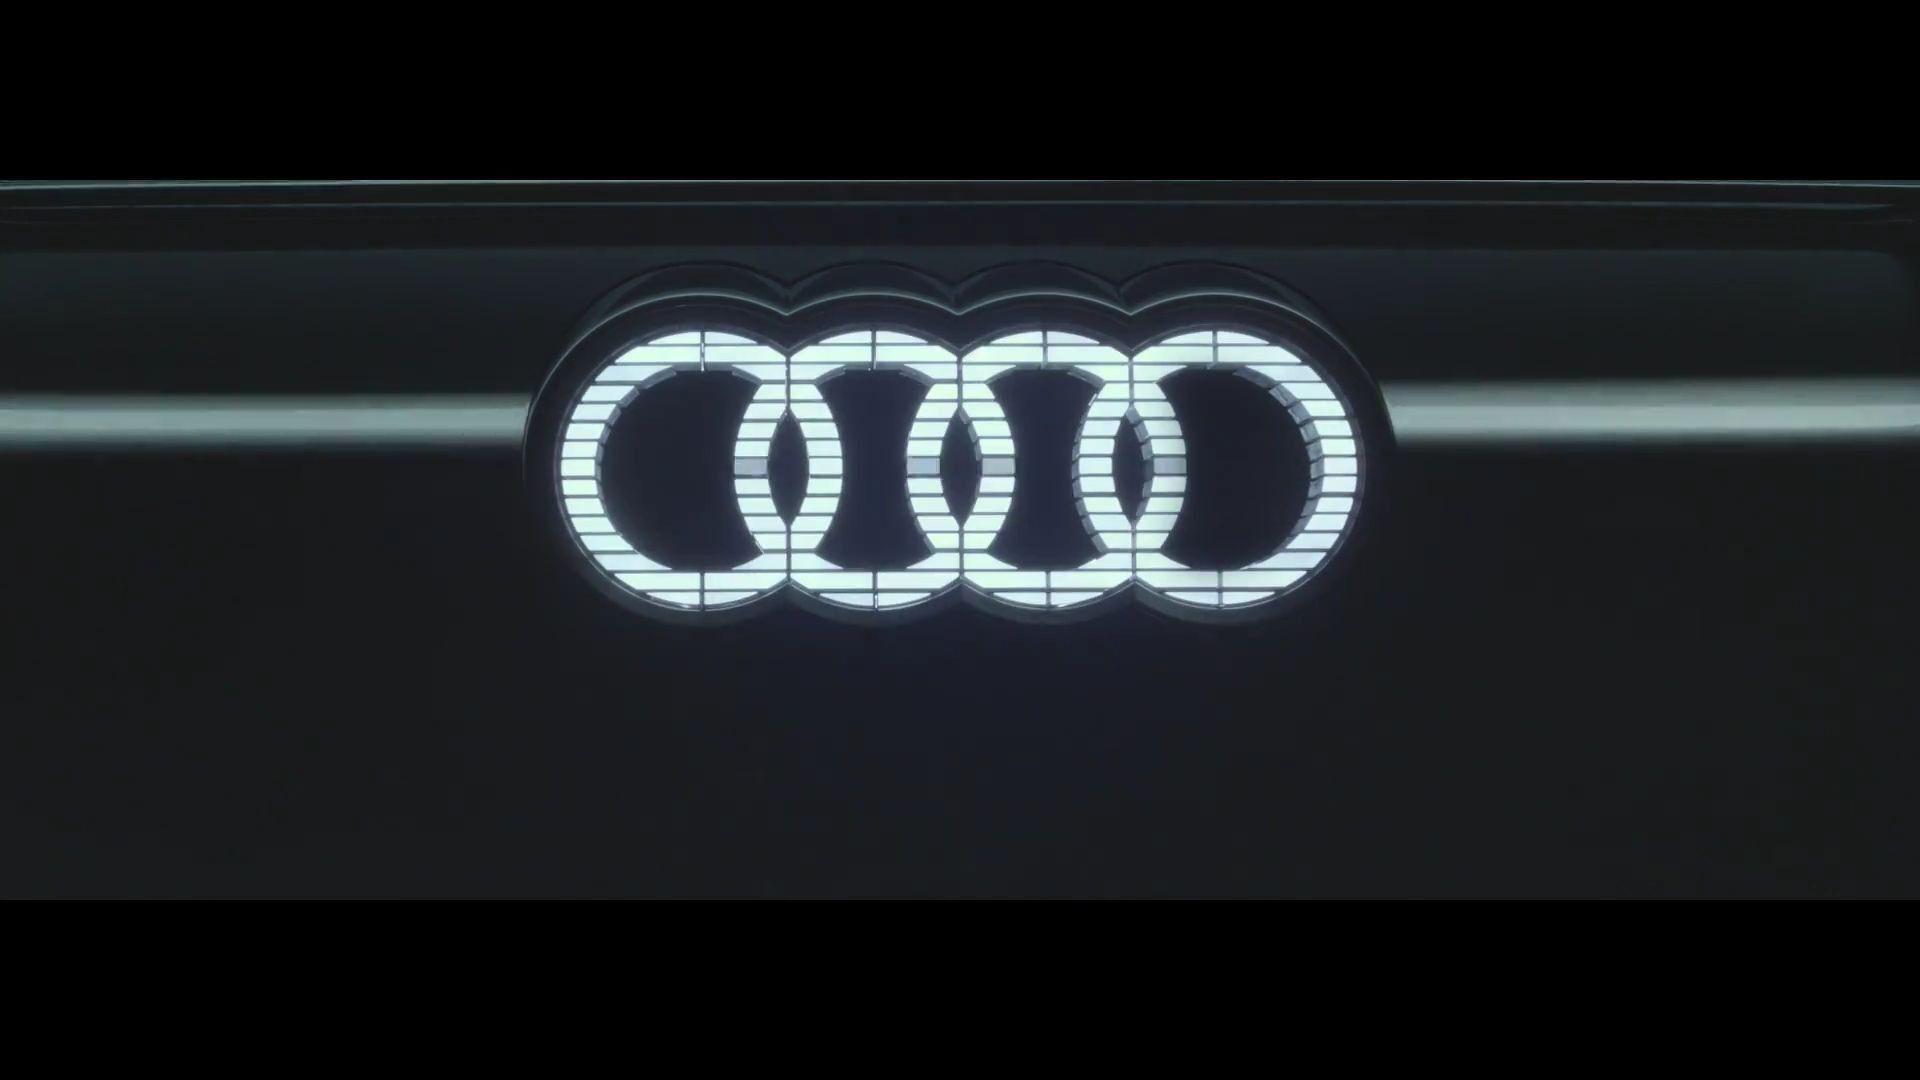 E-Tron Logo - Audi Goes LED Crazy In Teaser For New E-Tron Concept